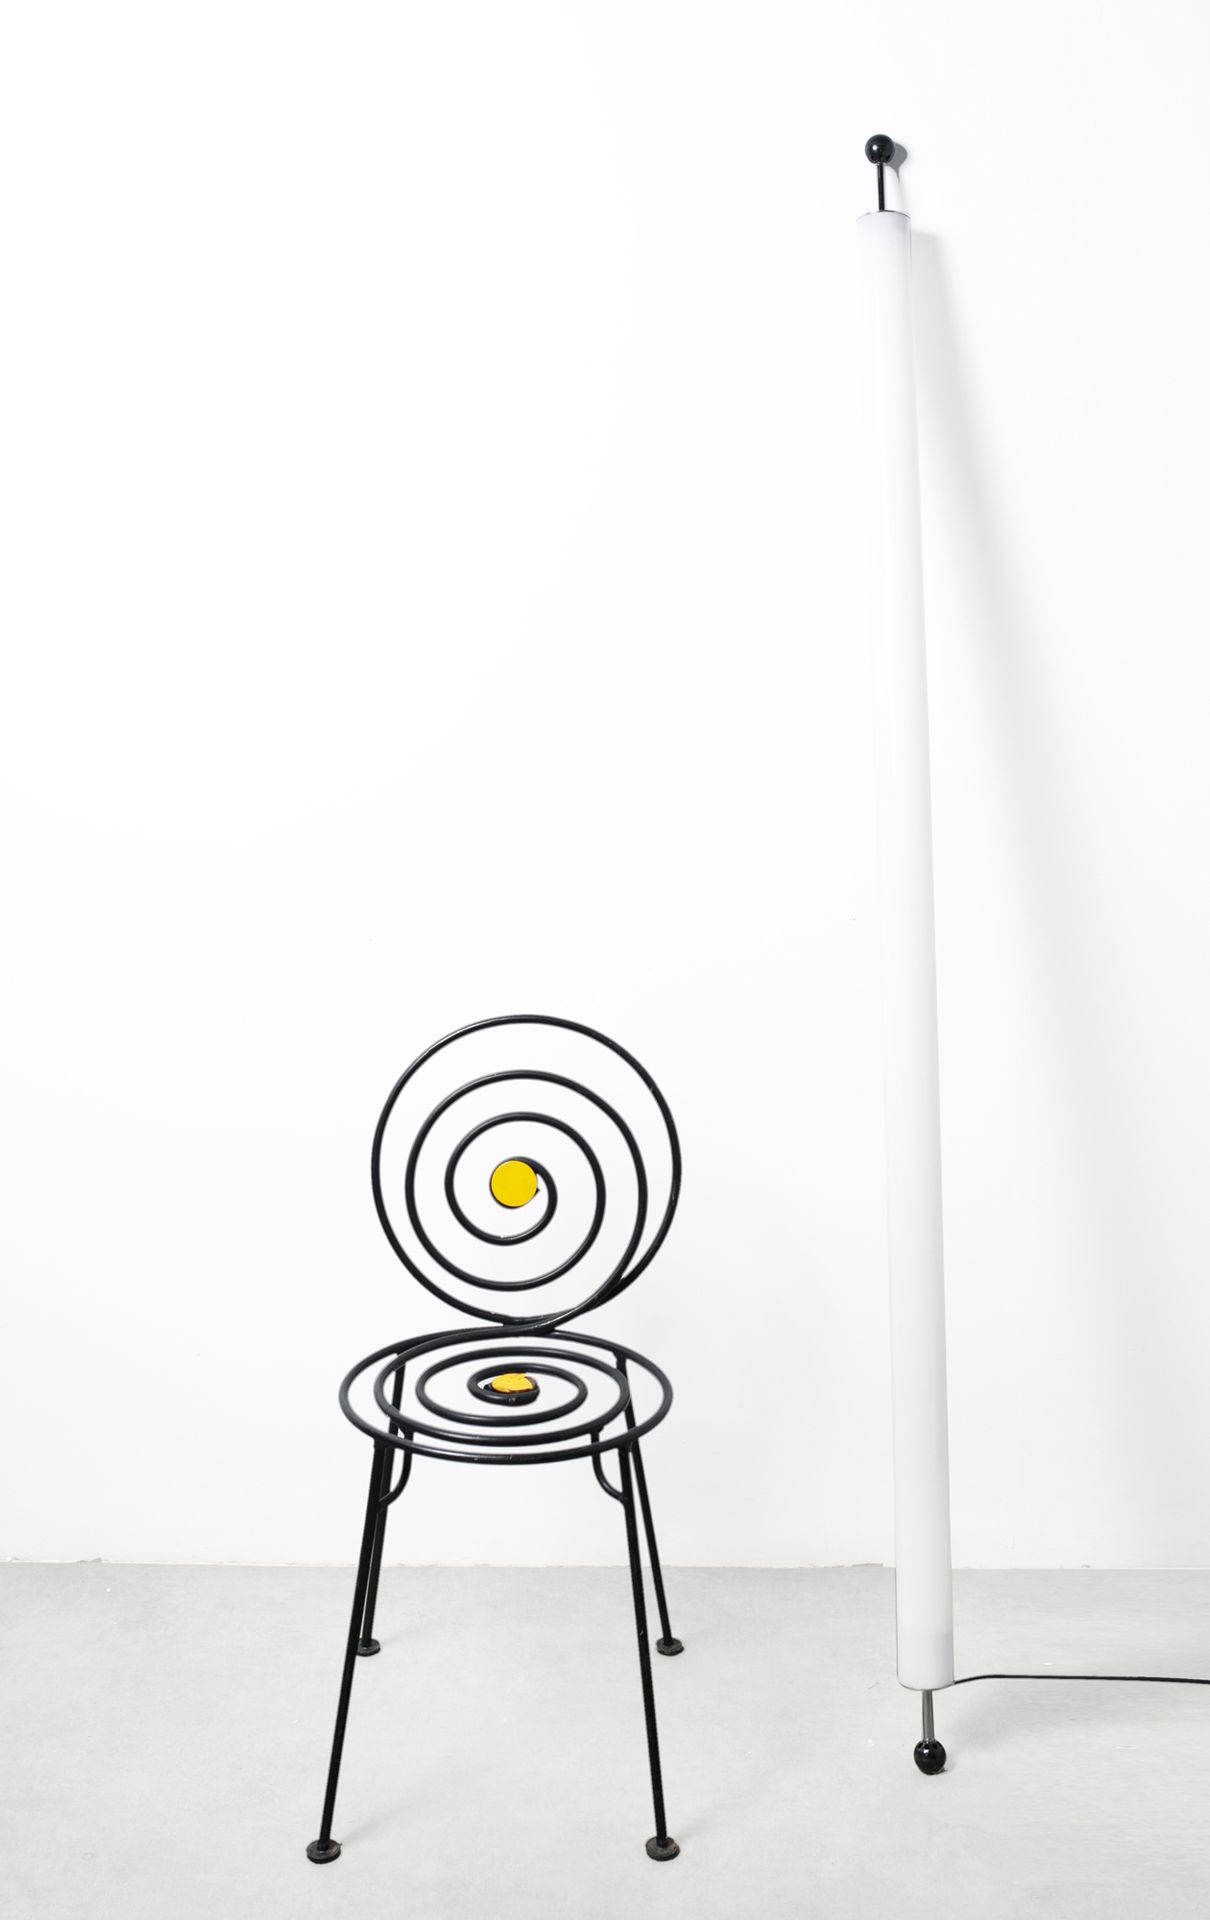 Null 拍品包括一把有螺旋形装饰的金属椅和一个霓虹灯。

霓虹灯：高_181厘米

金属椅子：高76厘米